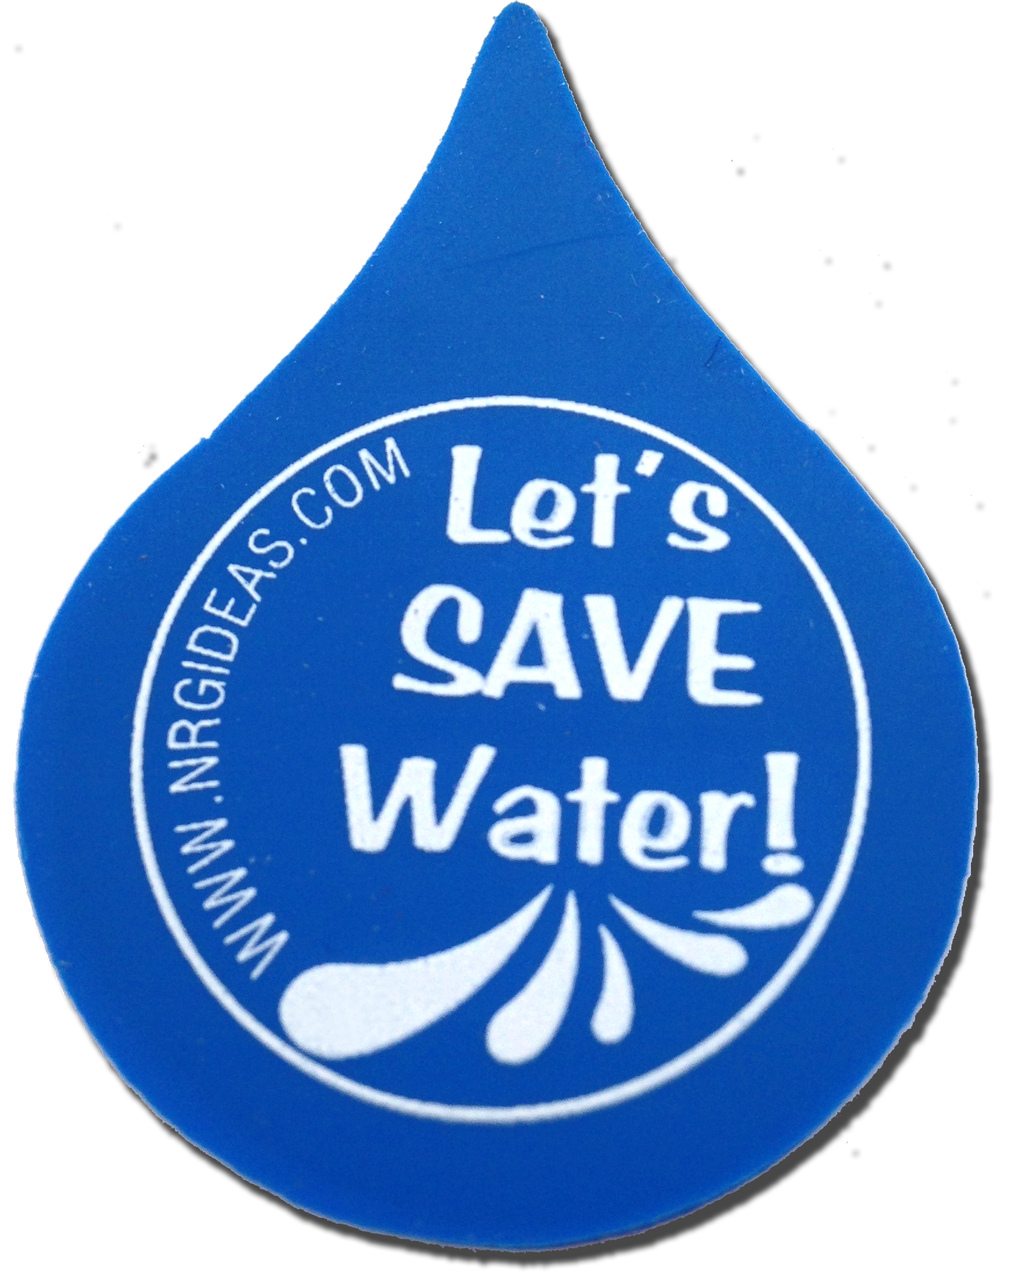 Water Smart Home Logo PNG Transparent & SVG Vector - Freebie Supply